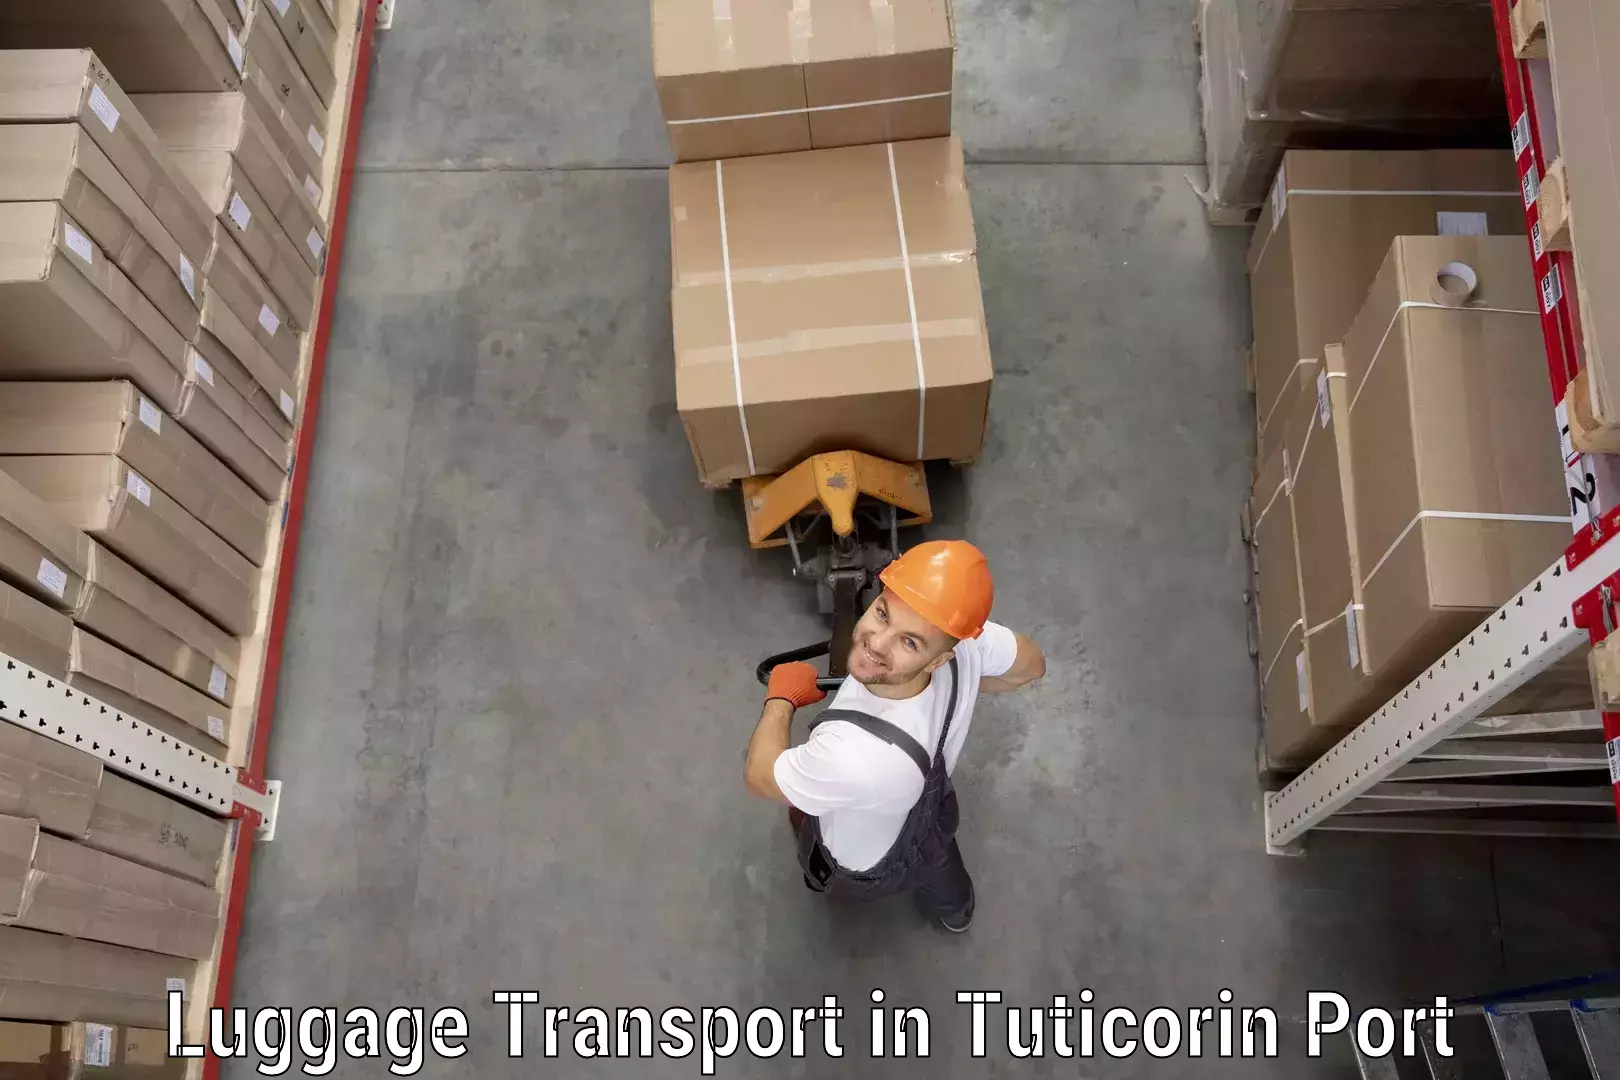 Luggage transit service in Tuticorin Port